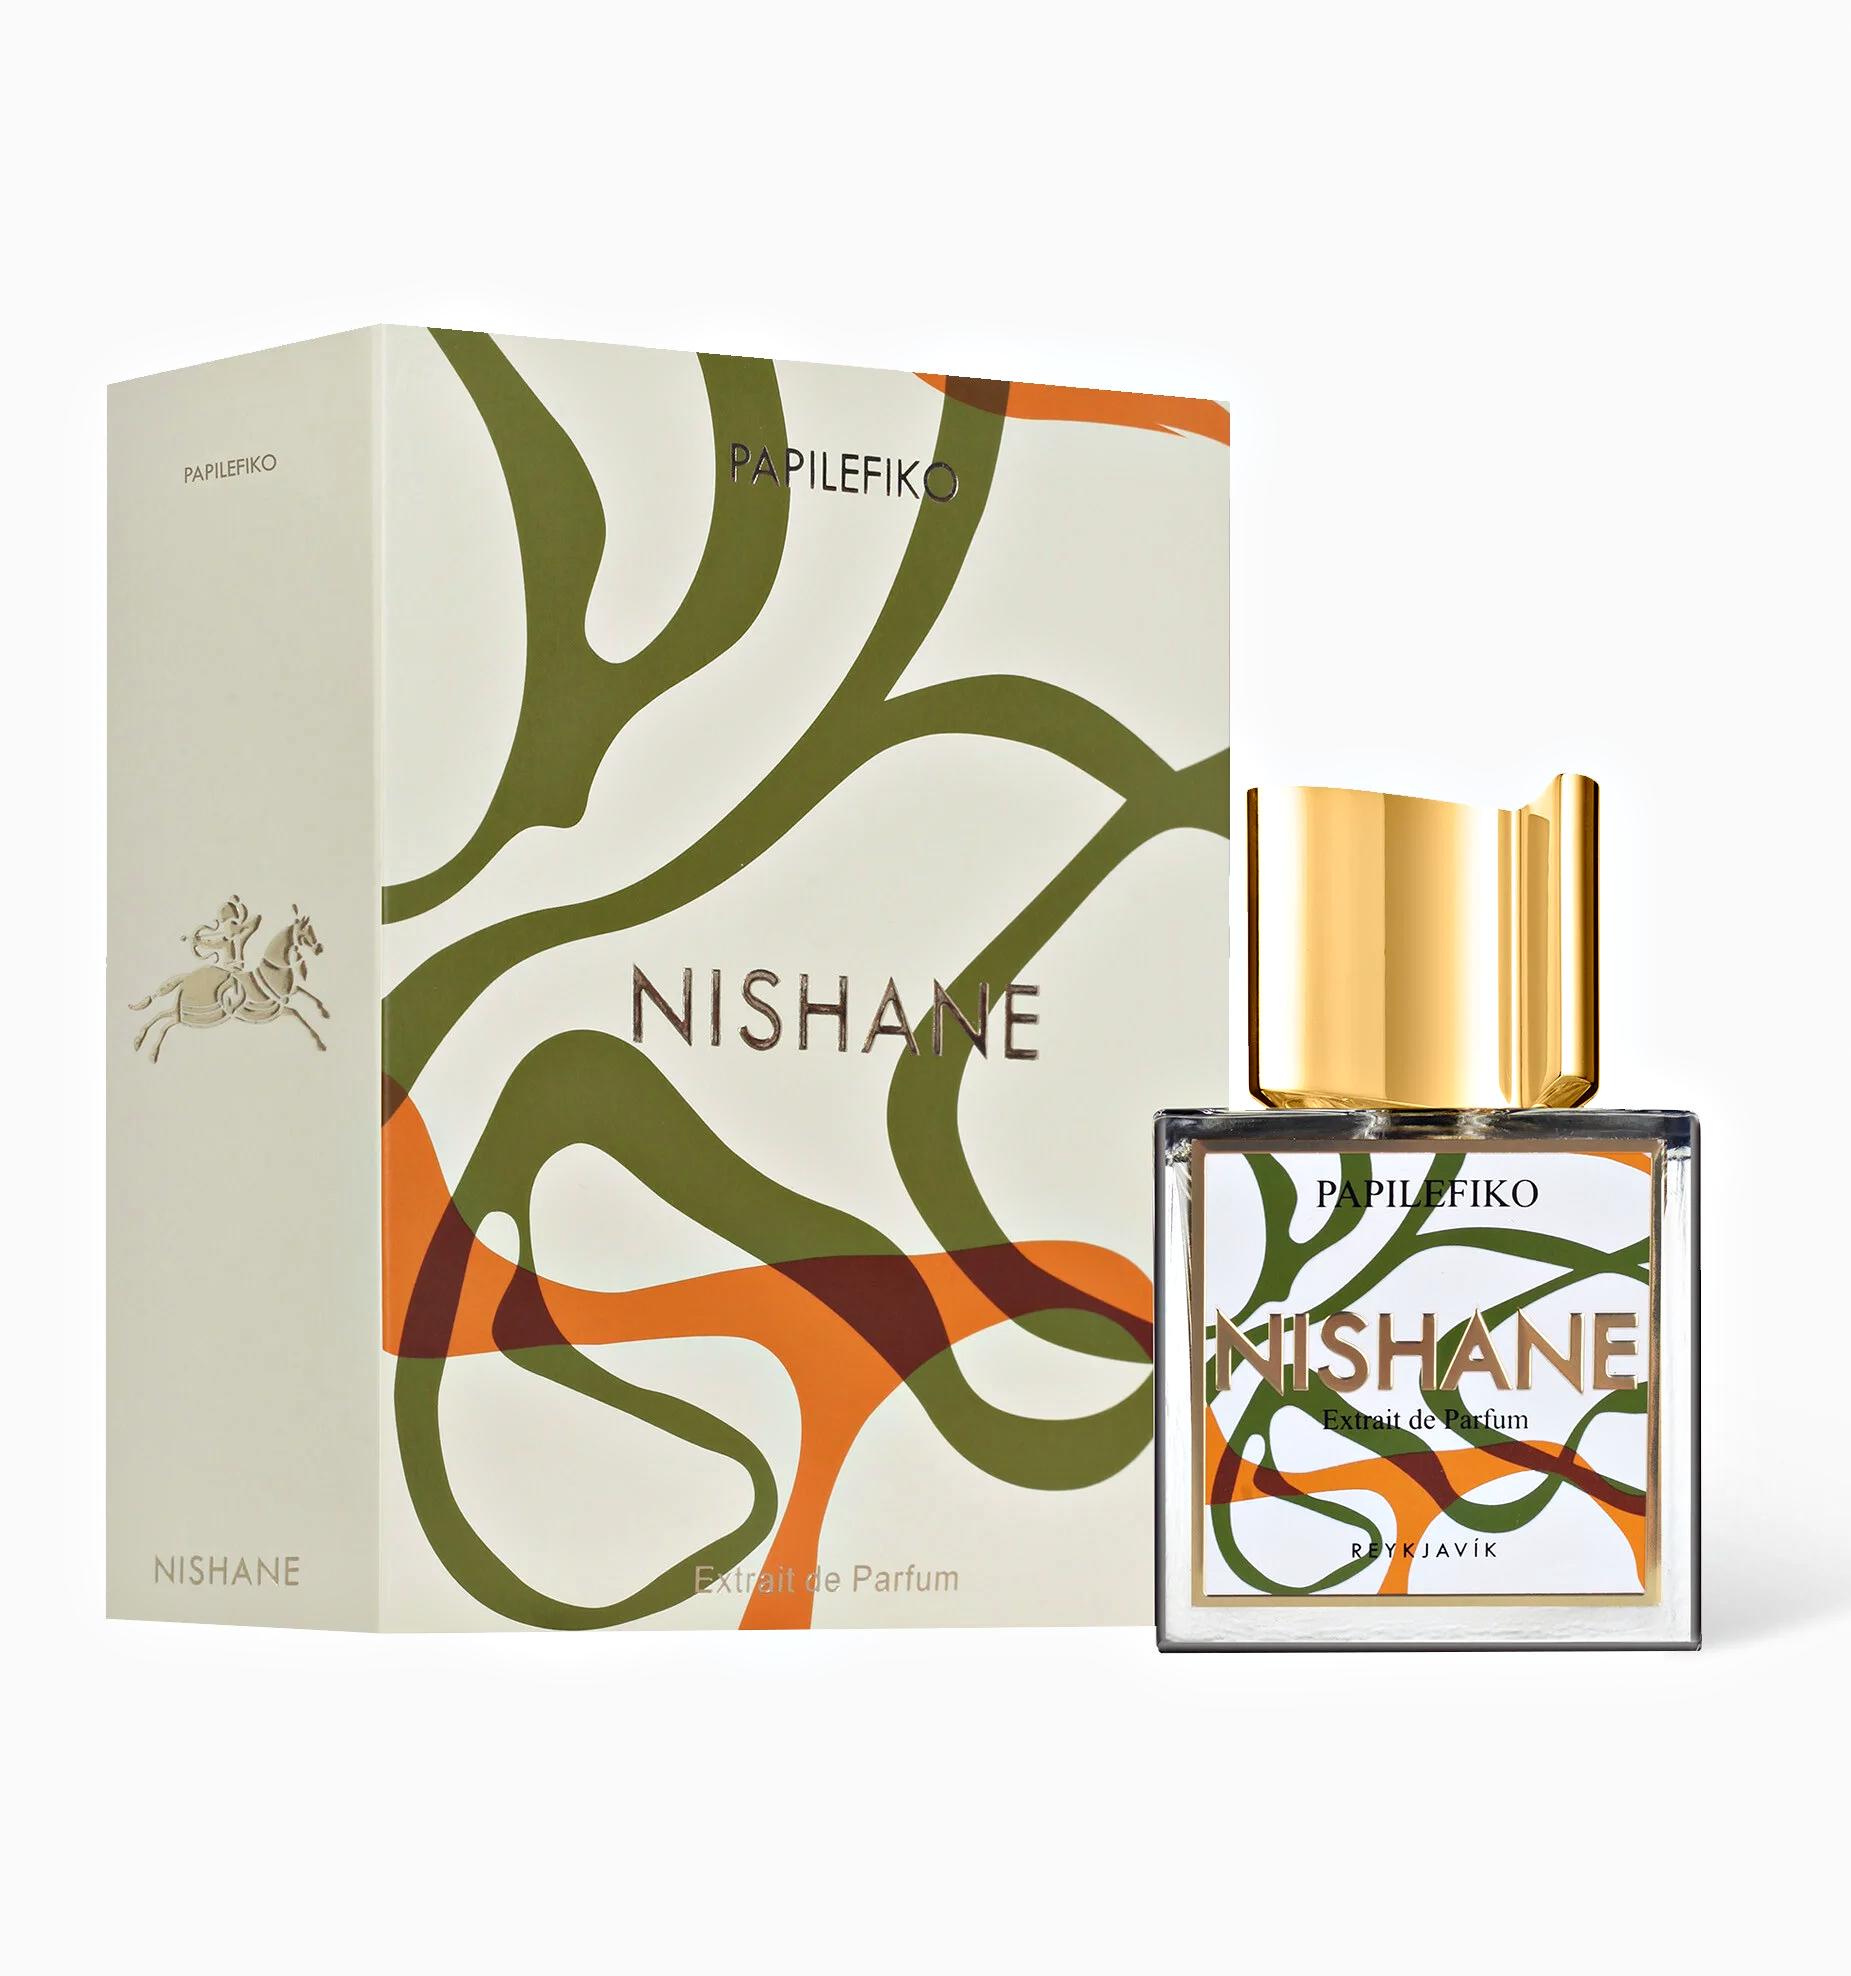 Papilefiko Nishane Extrait de Parfum 50ml - ON DEMAND BARBERS OSLO NORWAY